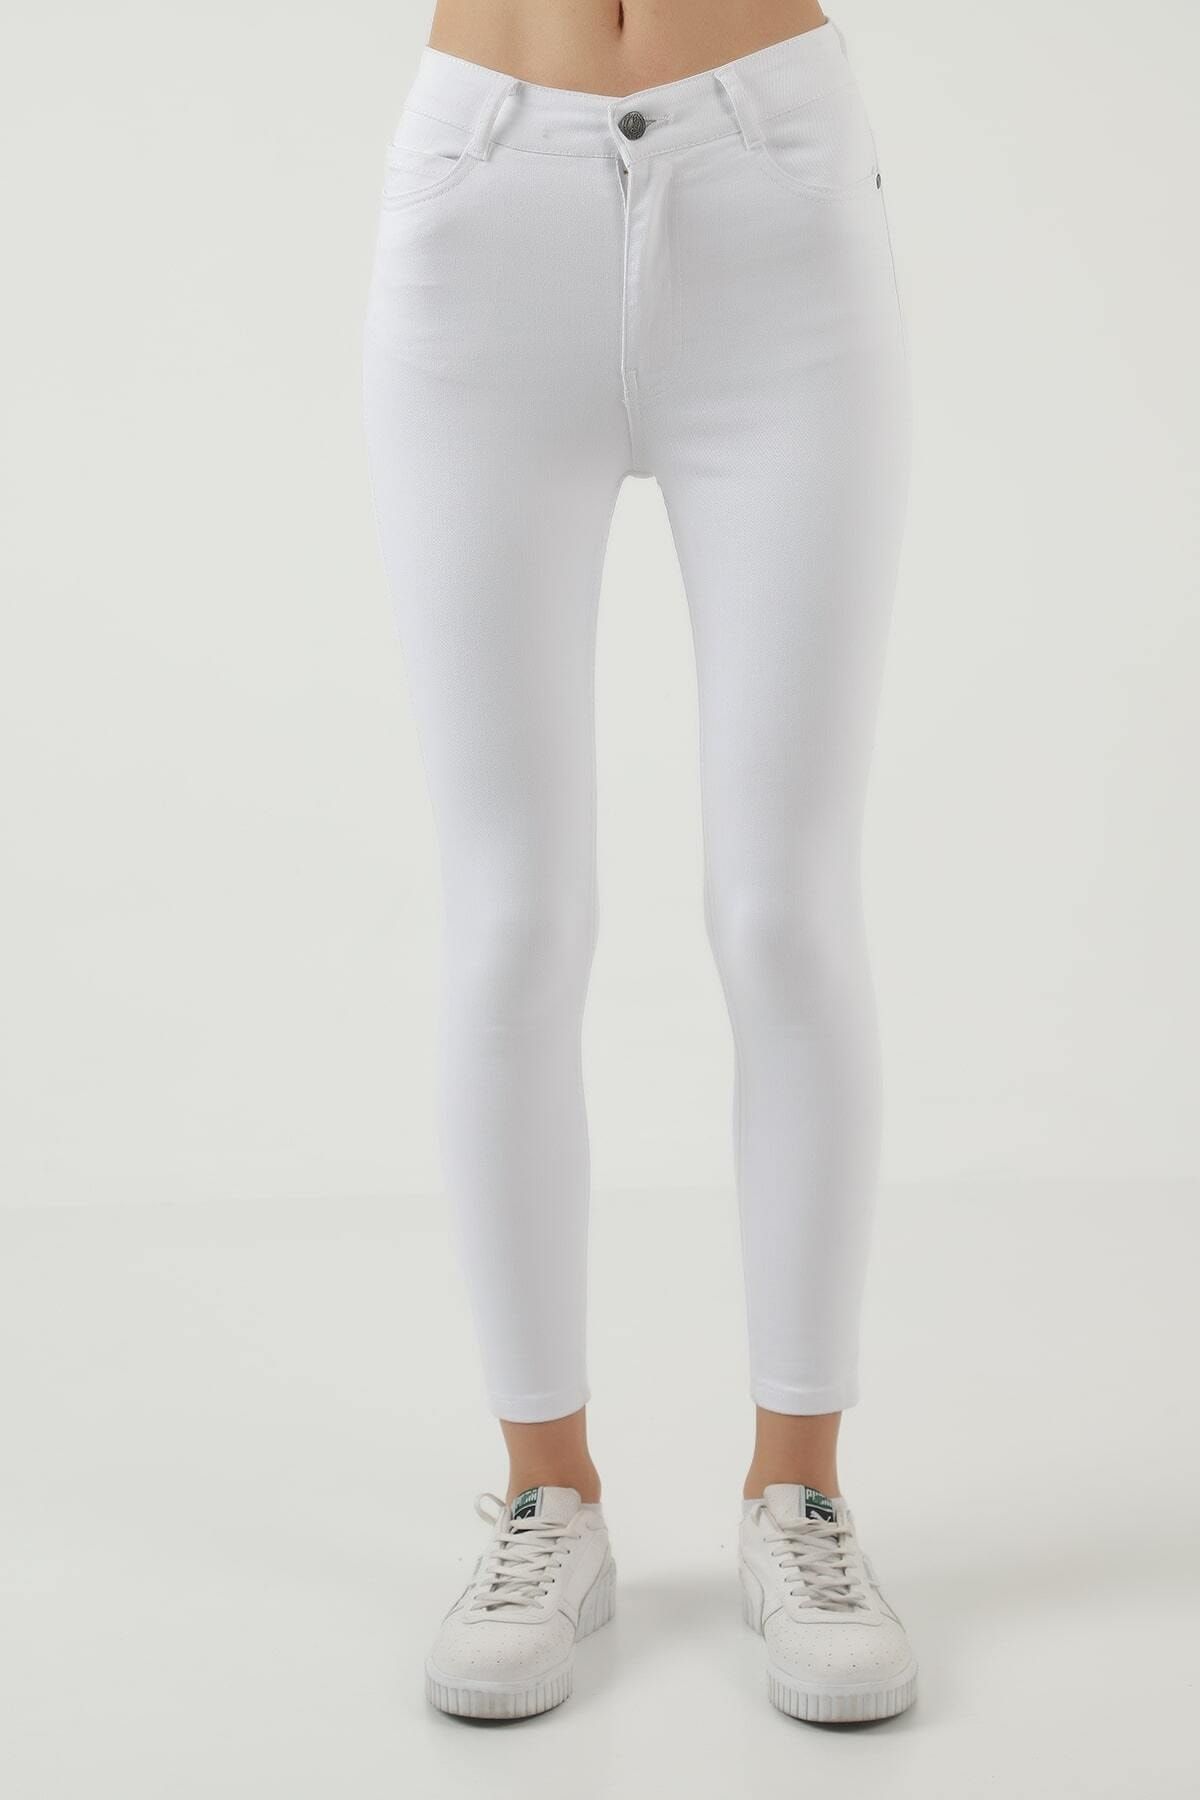 Viola Black Jeans Kadın Beyaz Yüksek Bel Kot Pantolon